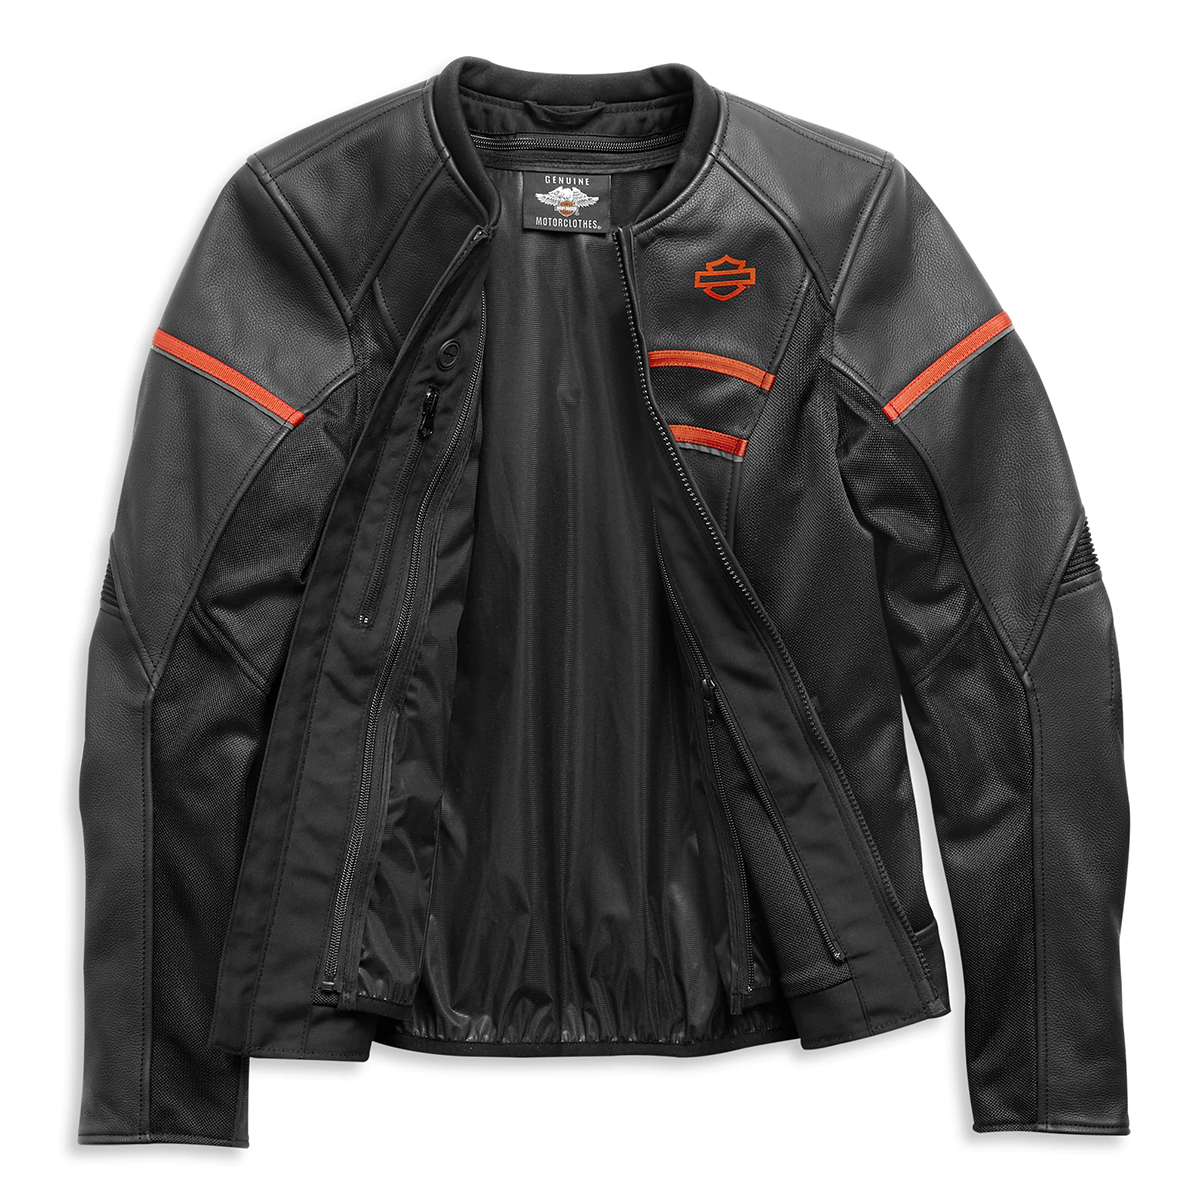 Harley-Davidson H-D Brawler Women's Leather Jacket - 98007-21VW